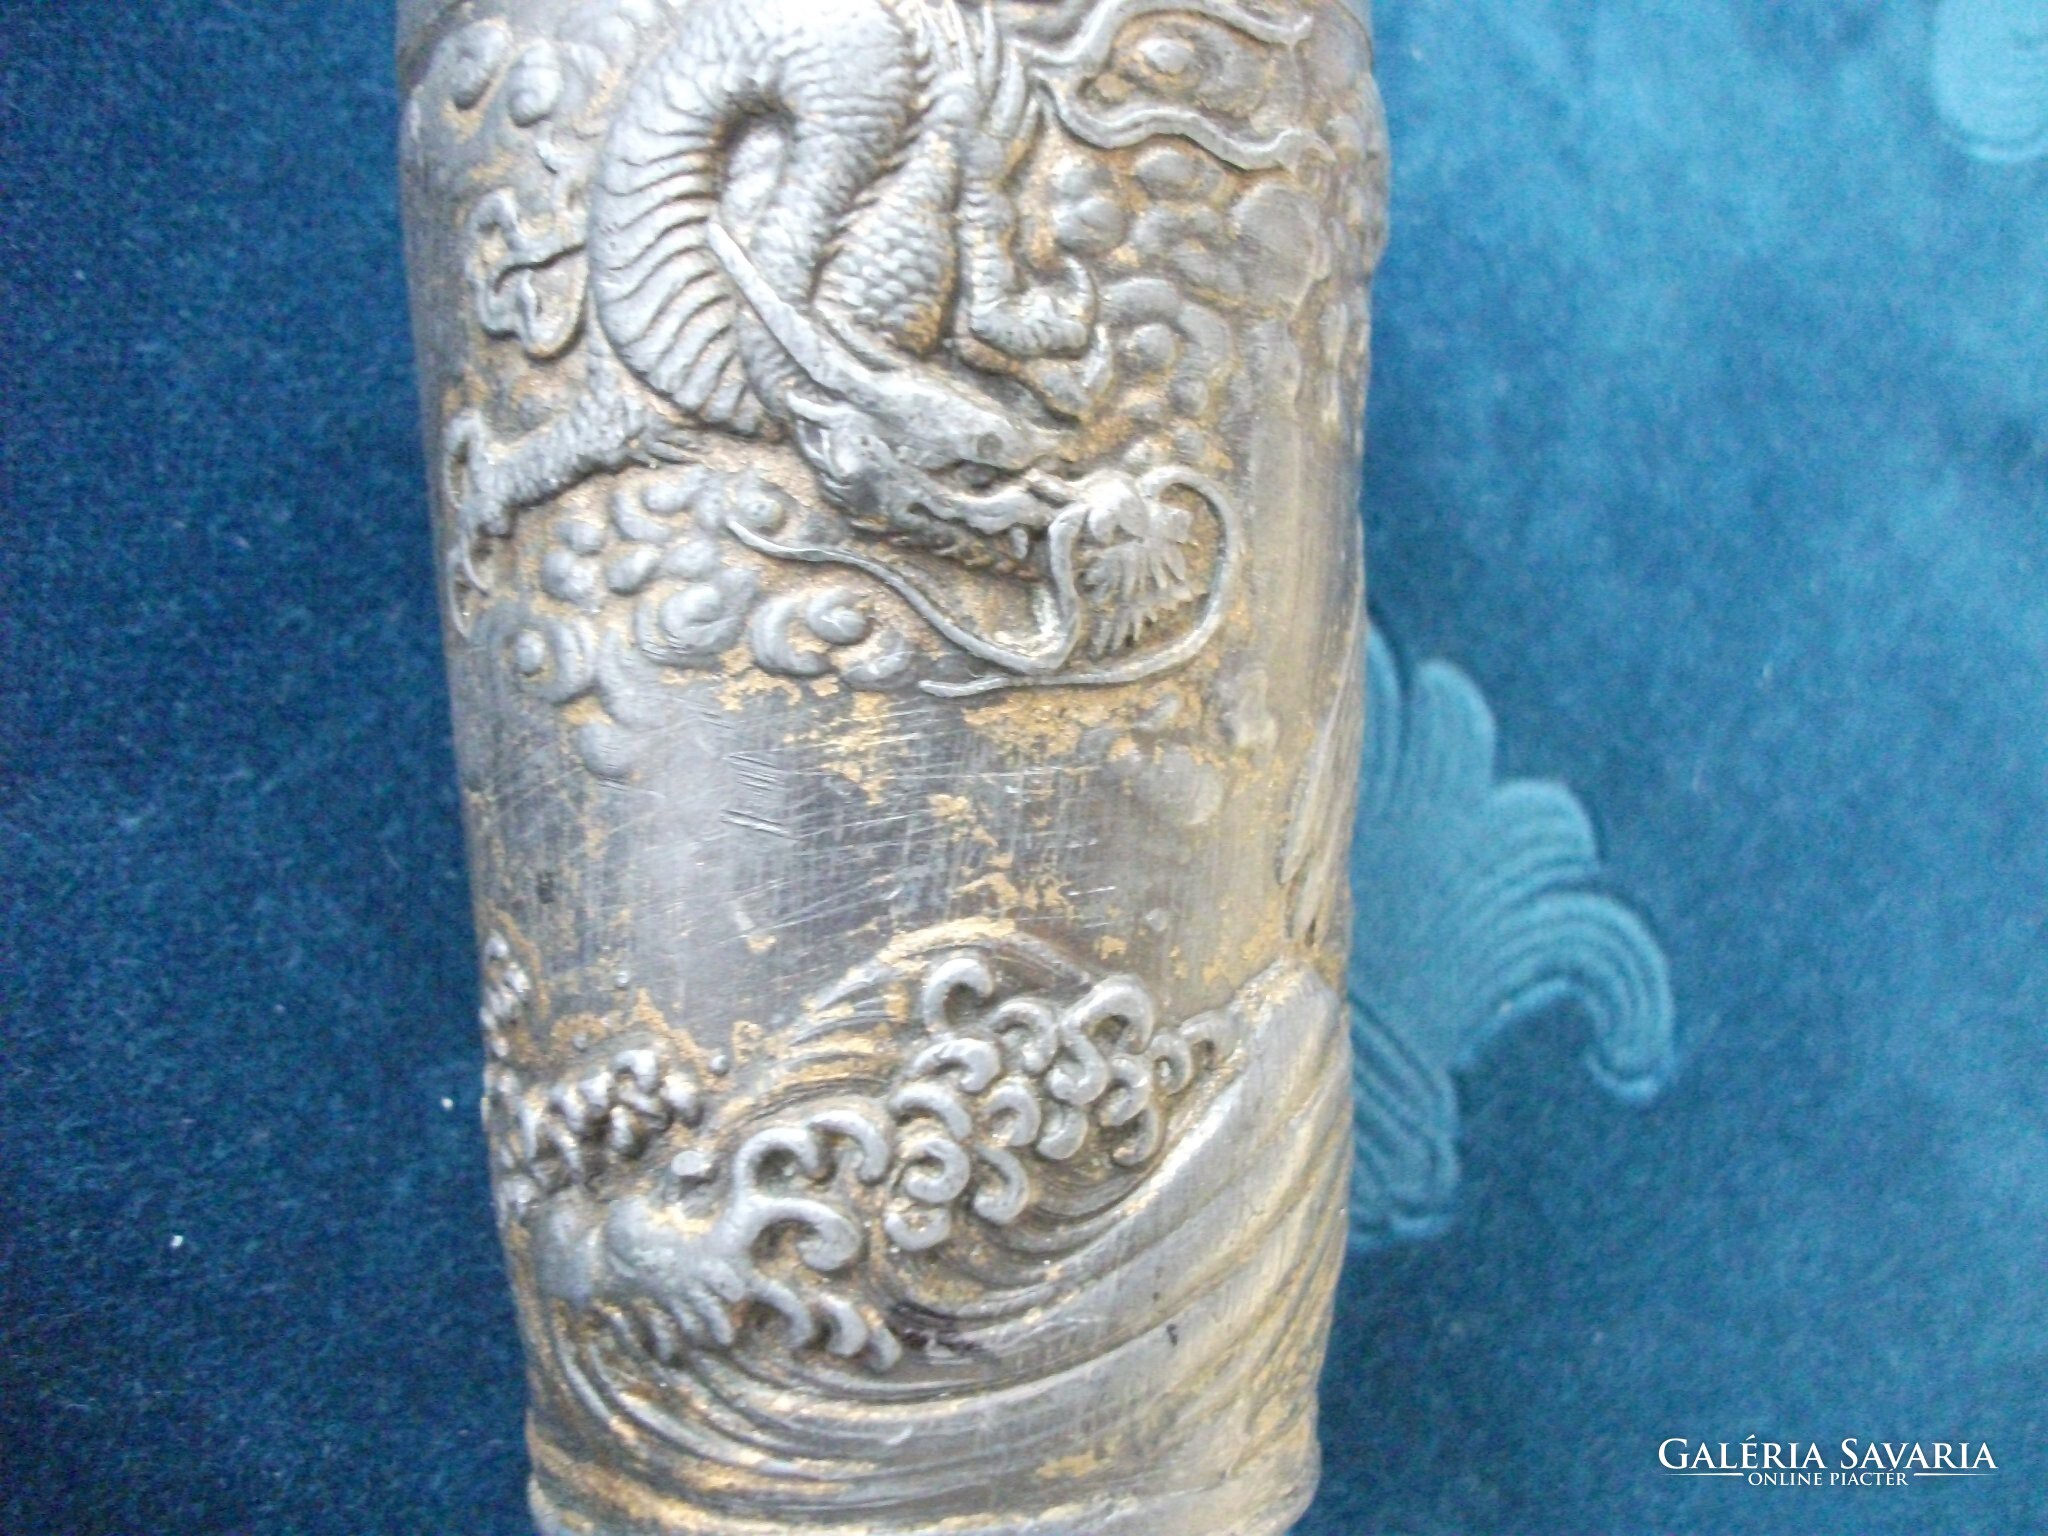 Antik Kinai Sarkany Es Sas Mintaval Dombor Fem Ecset Tarto Porcelan Galeria Savaria Online Piacter Antik Mutargy Regiseg Vasarlas Es Eladas